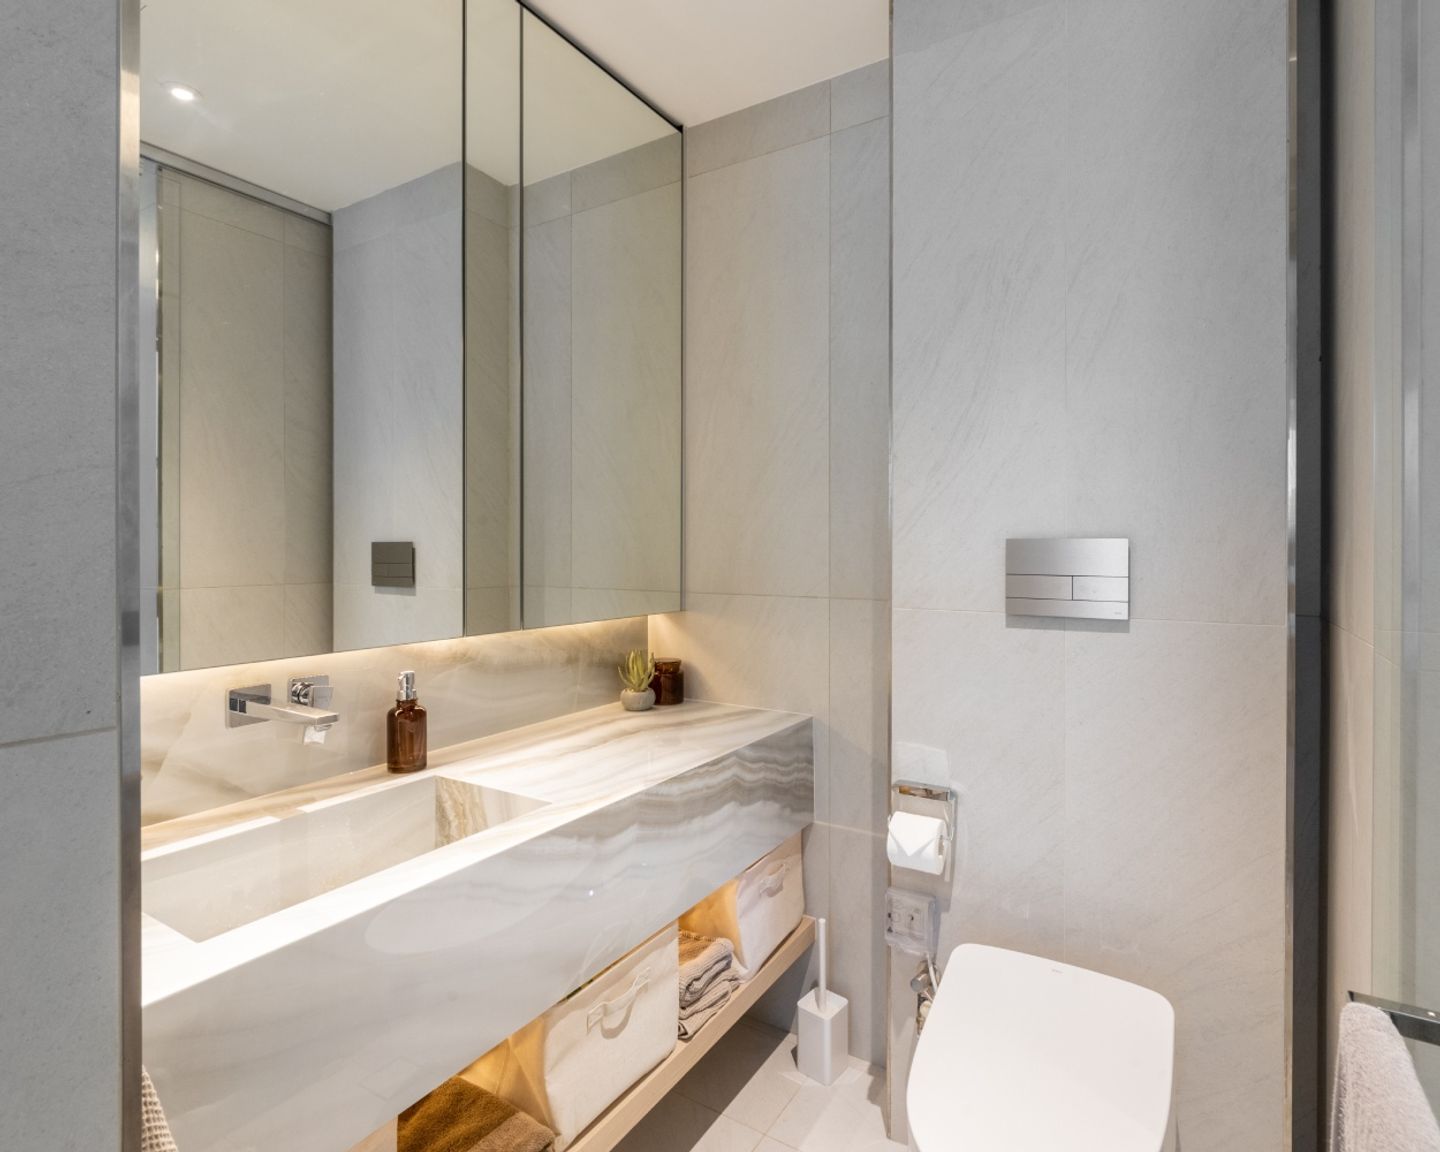 Bathroom Design With Storage Shelves - Livspace